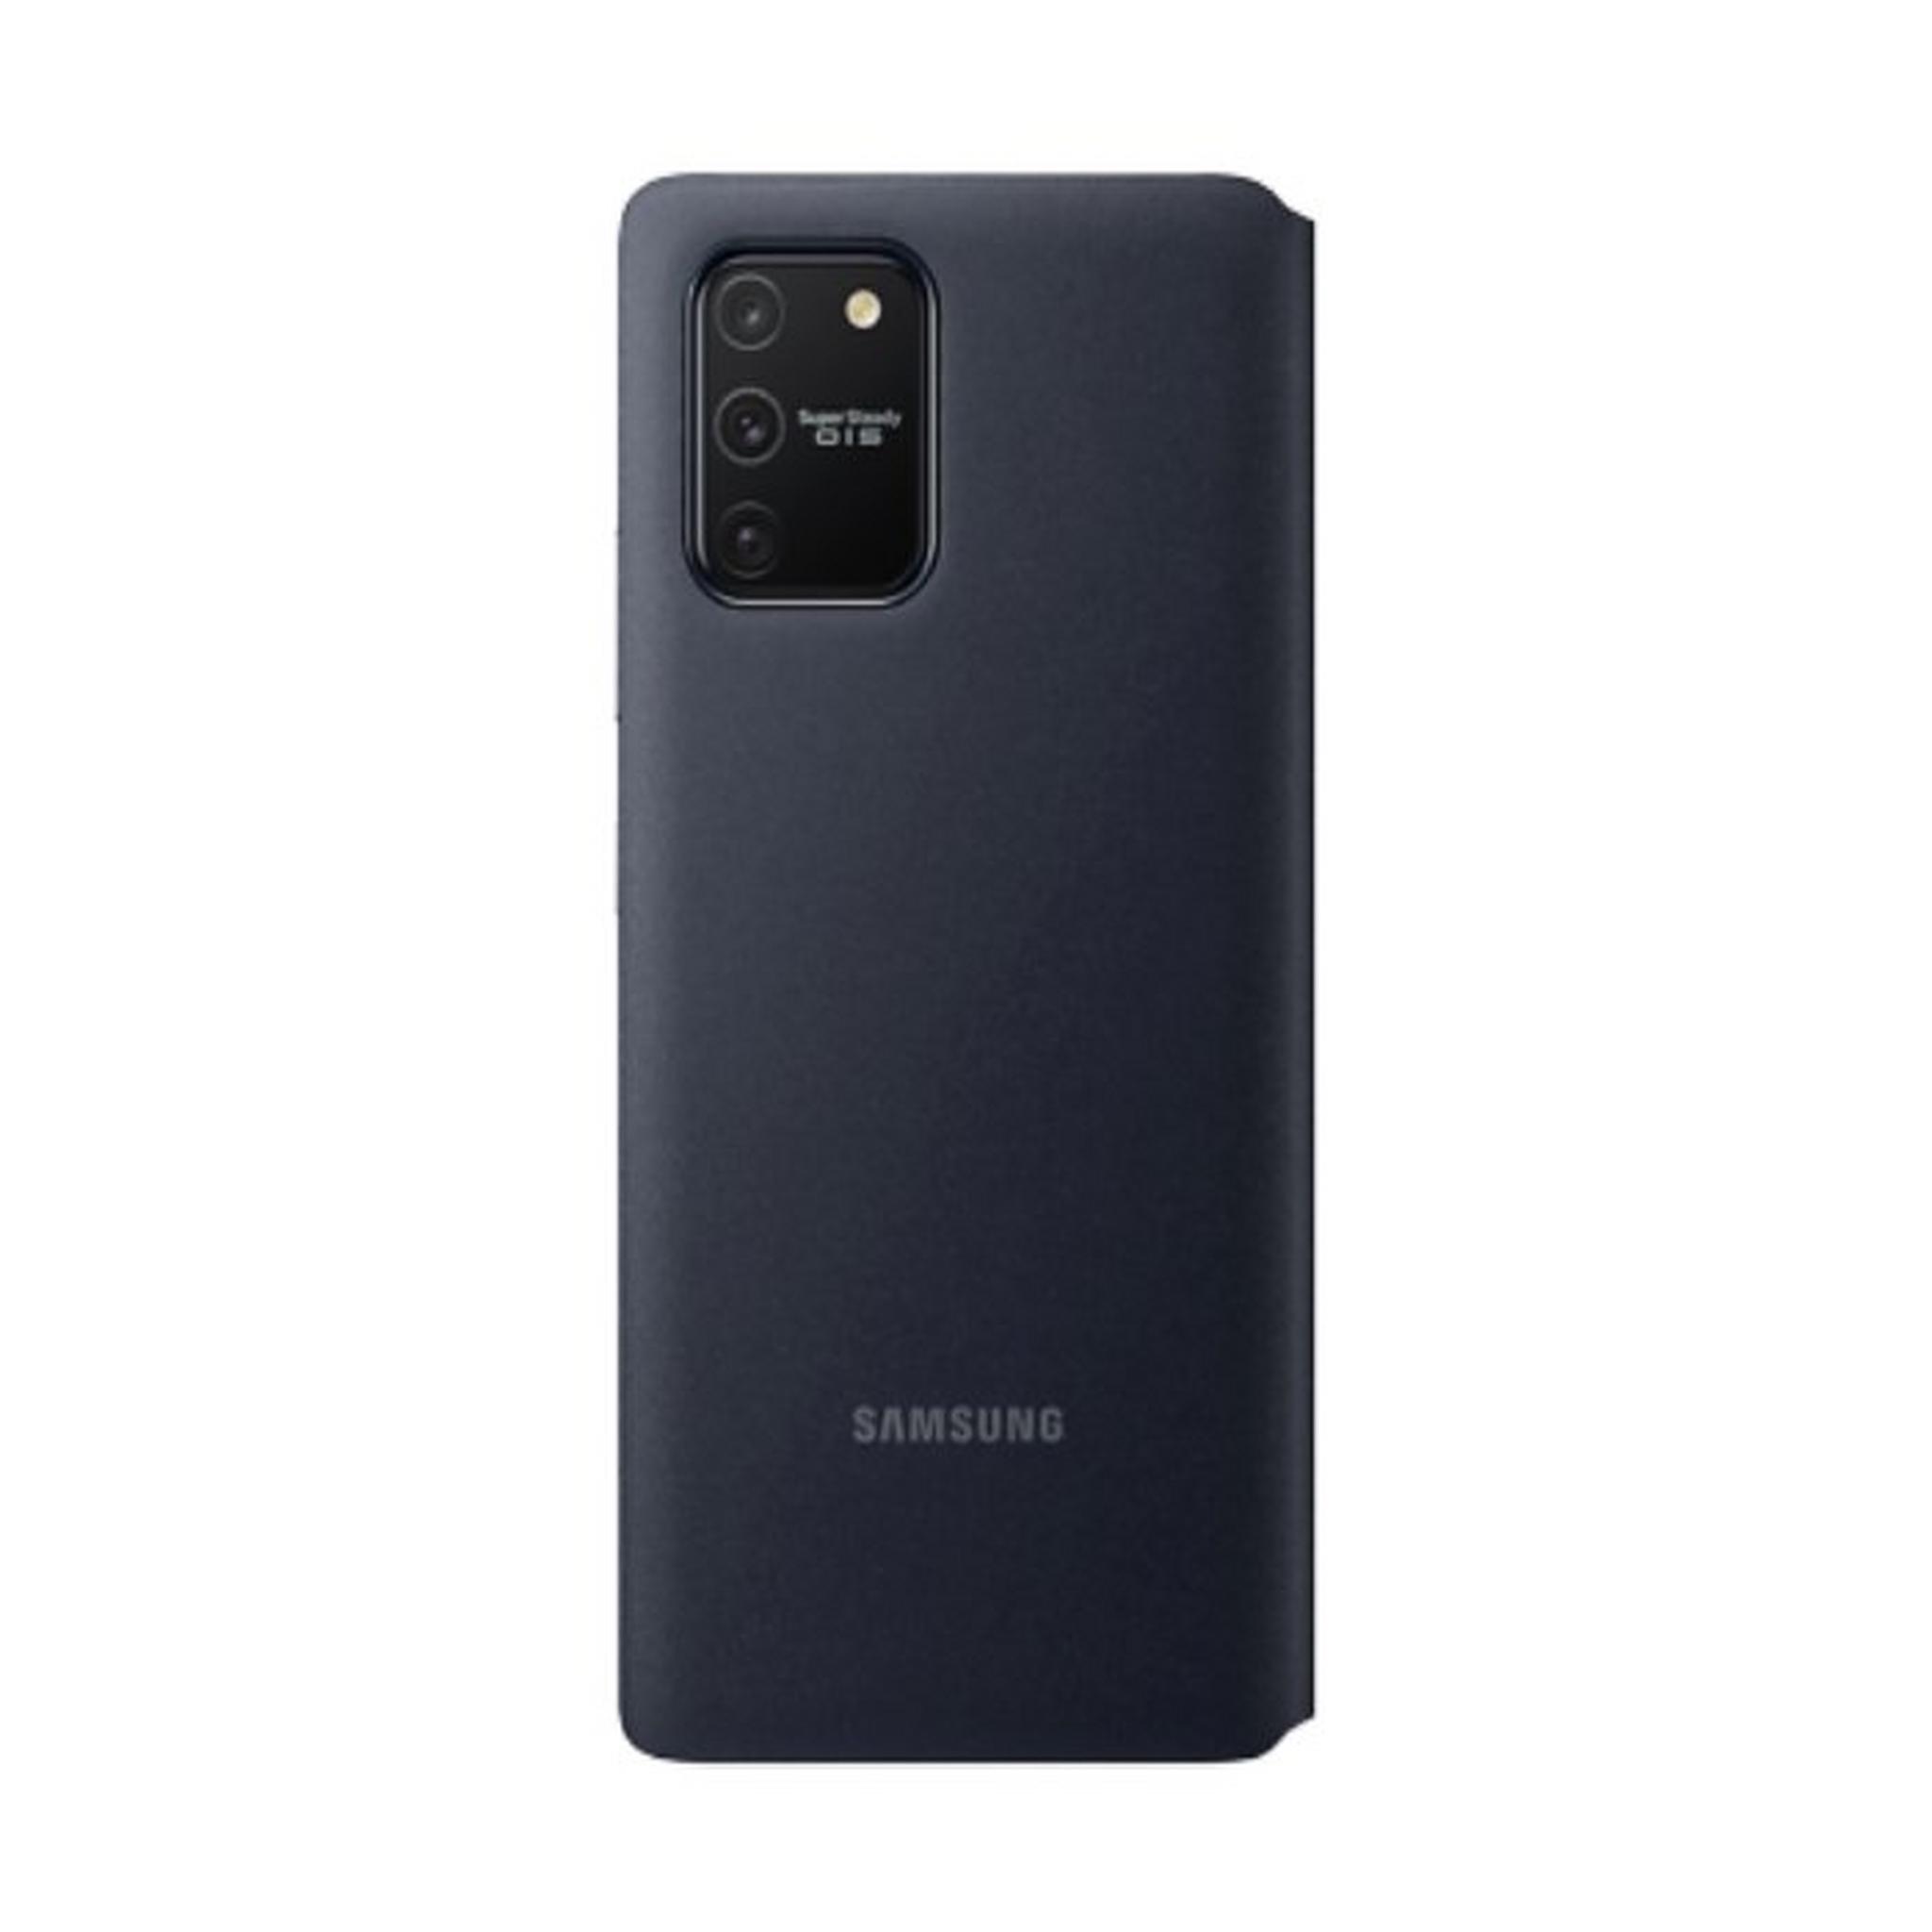 Samsung Galaxy S10 Lite Wallet Cover - Black